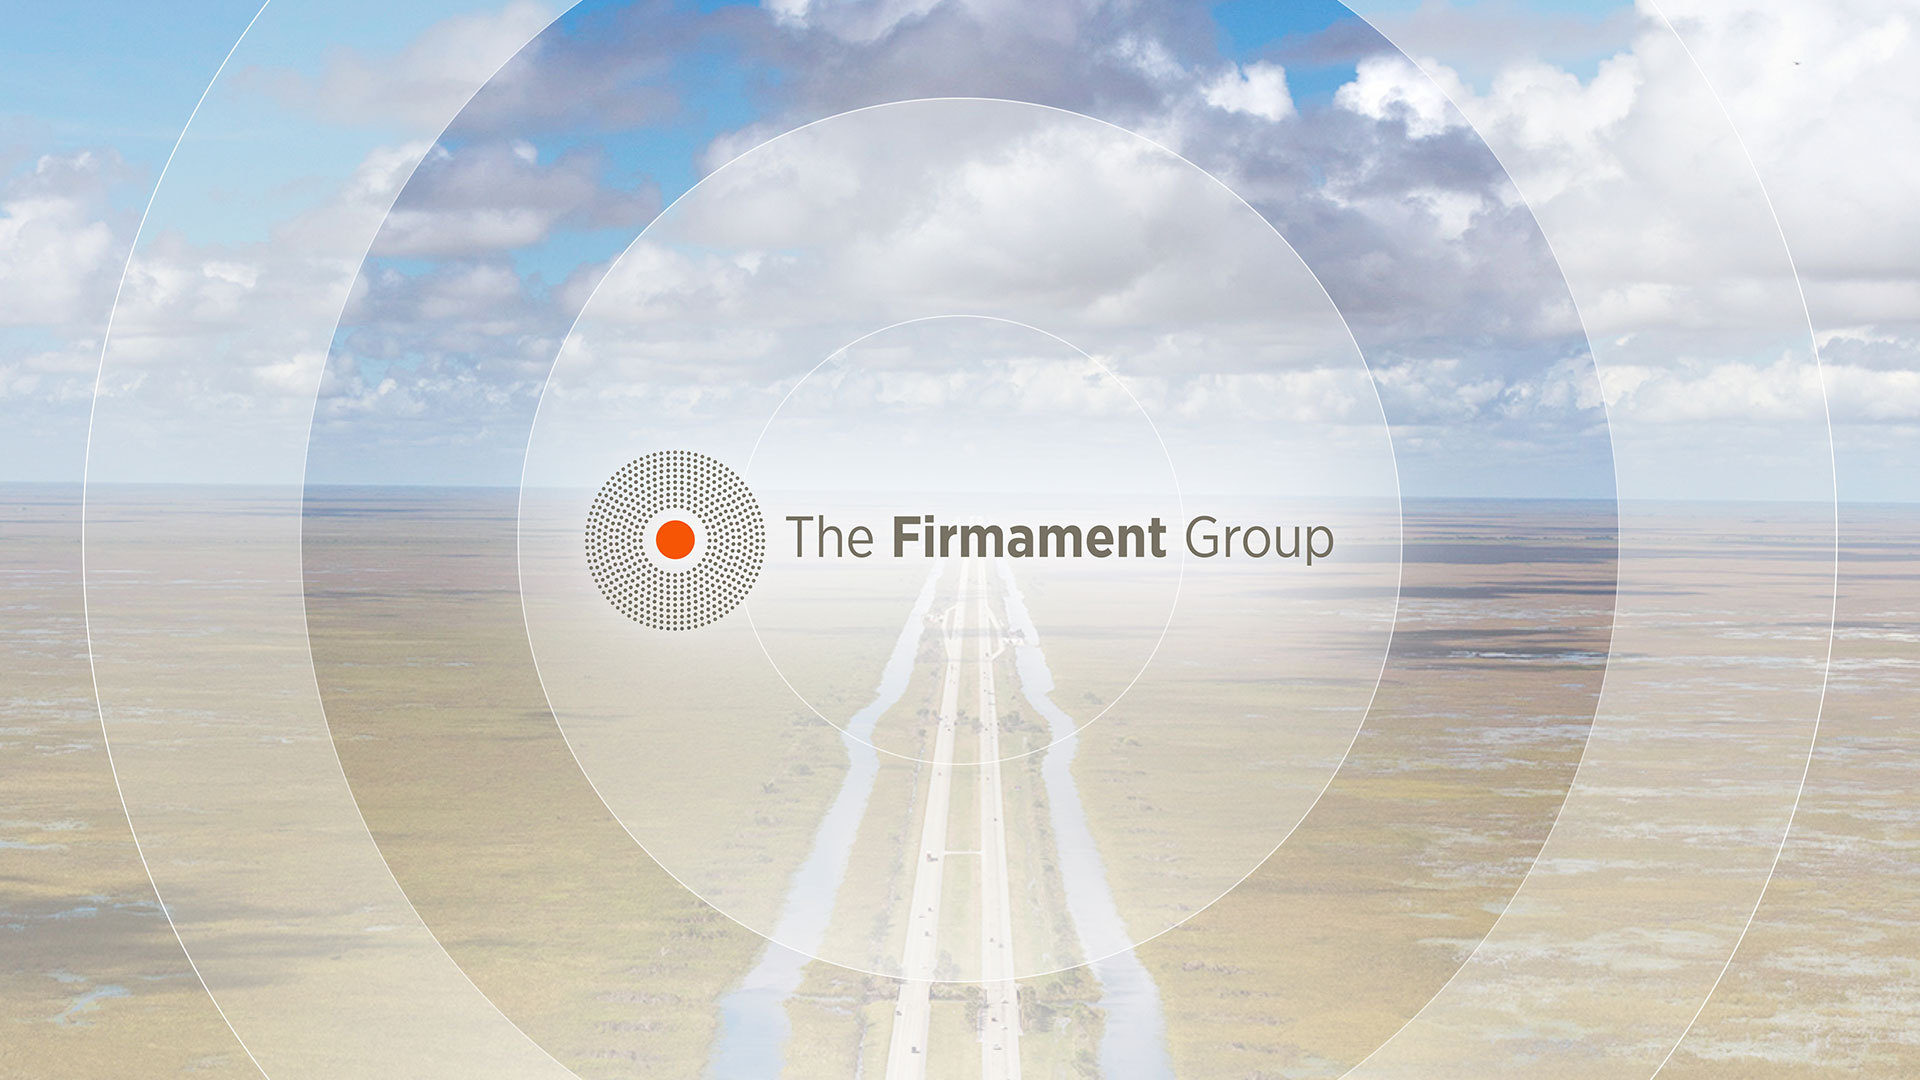 The Firmament Group Website Design and Development